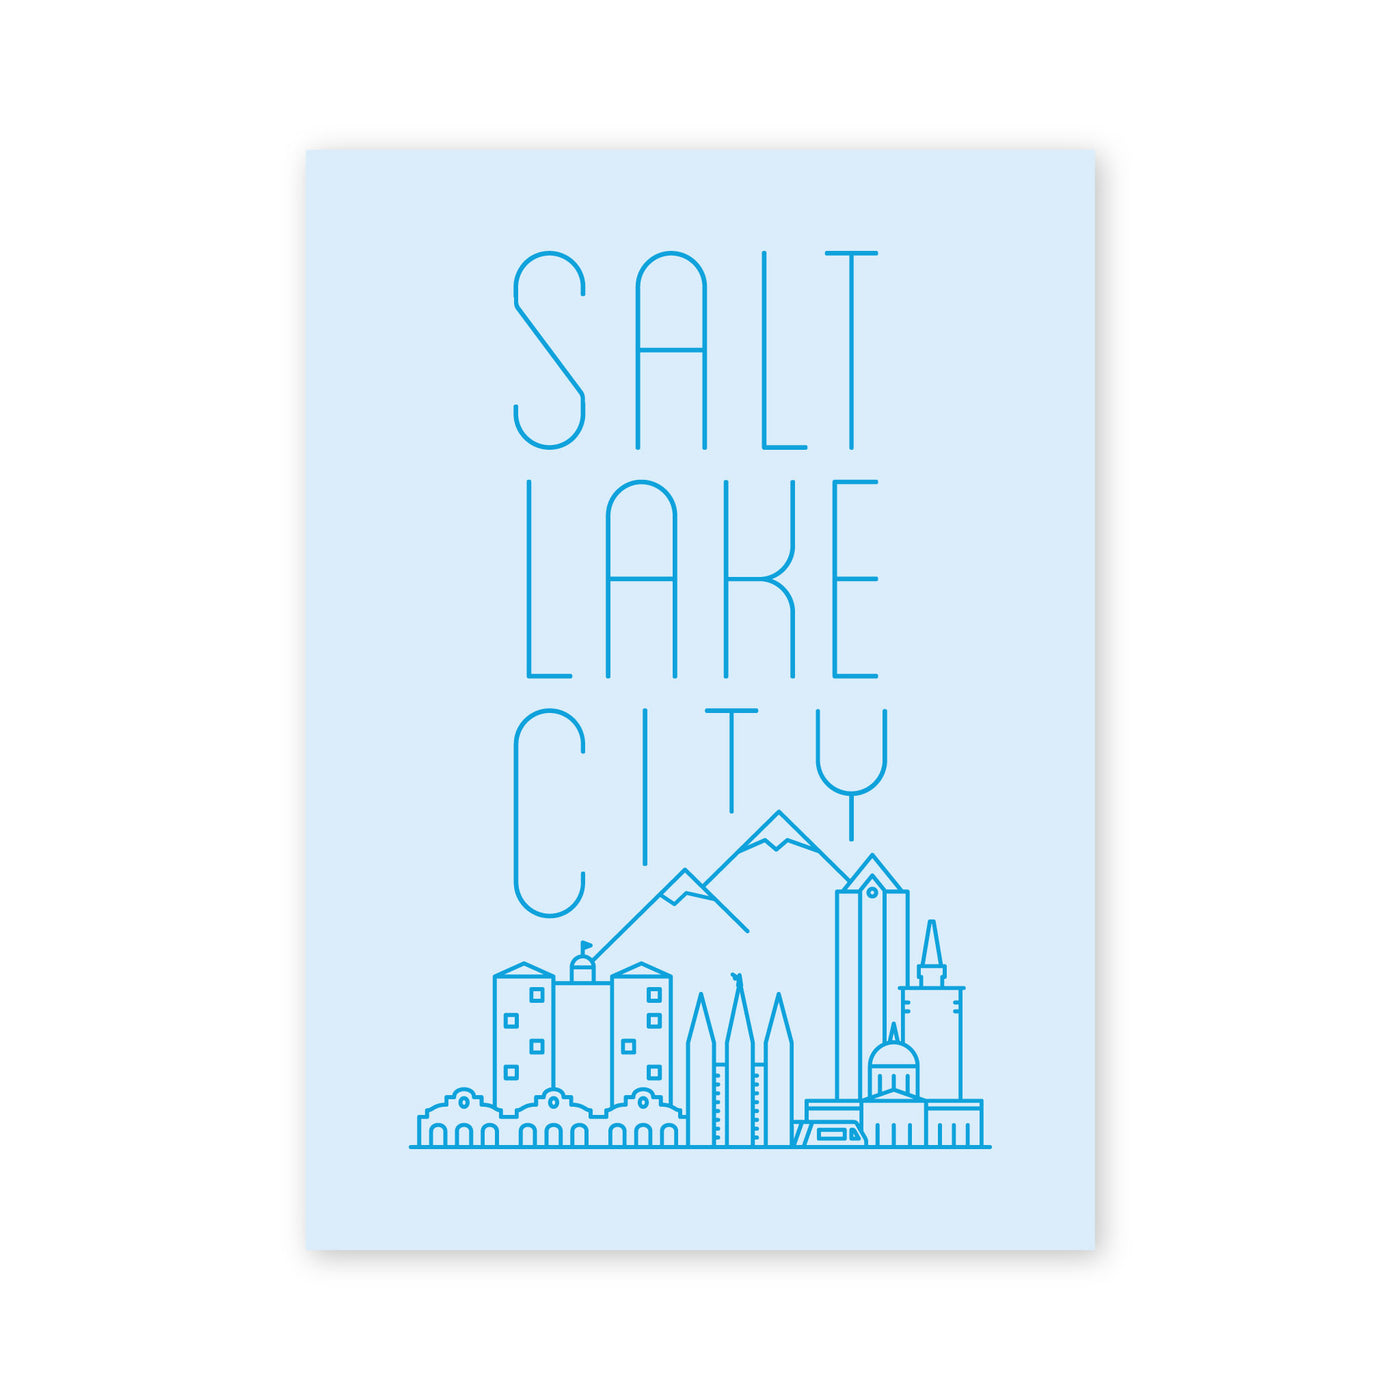 Salt Lake City Skyline Postcard